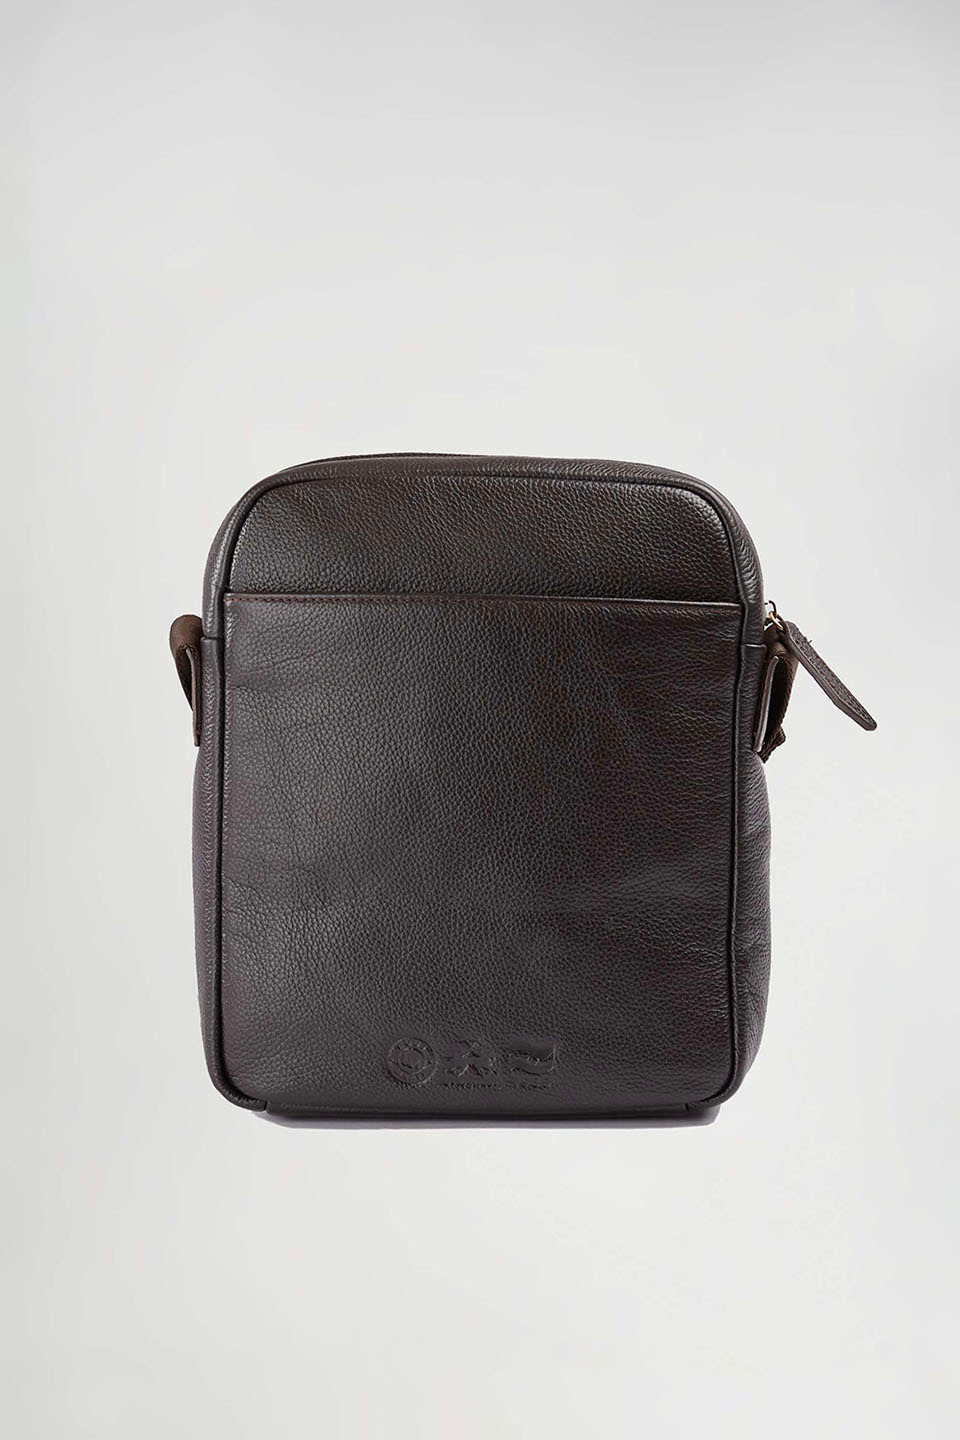 Leather bag - La Martina - Official Online Shop